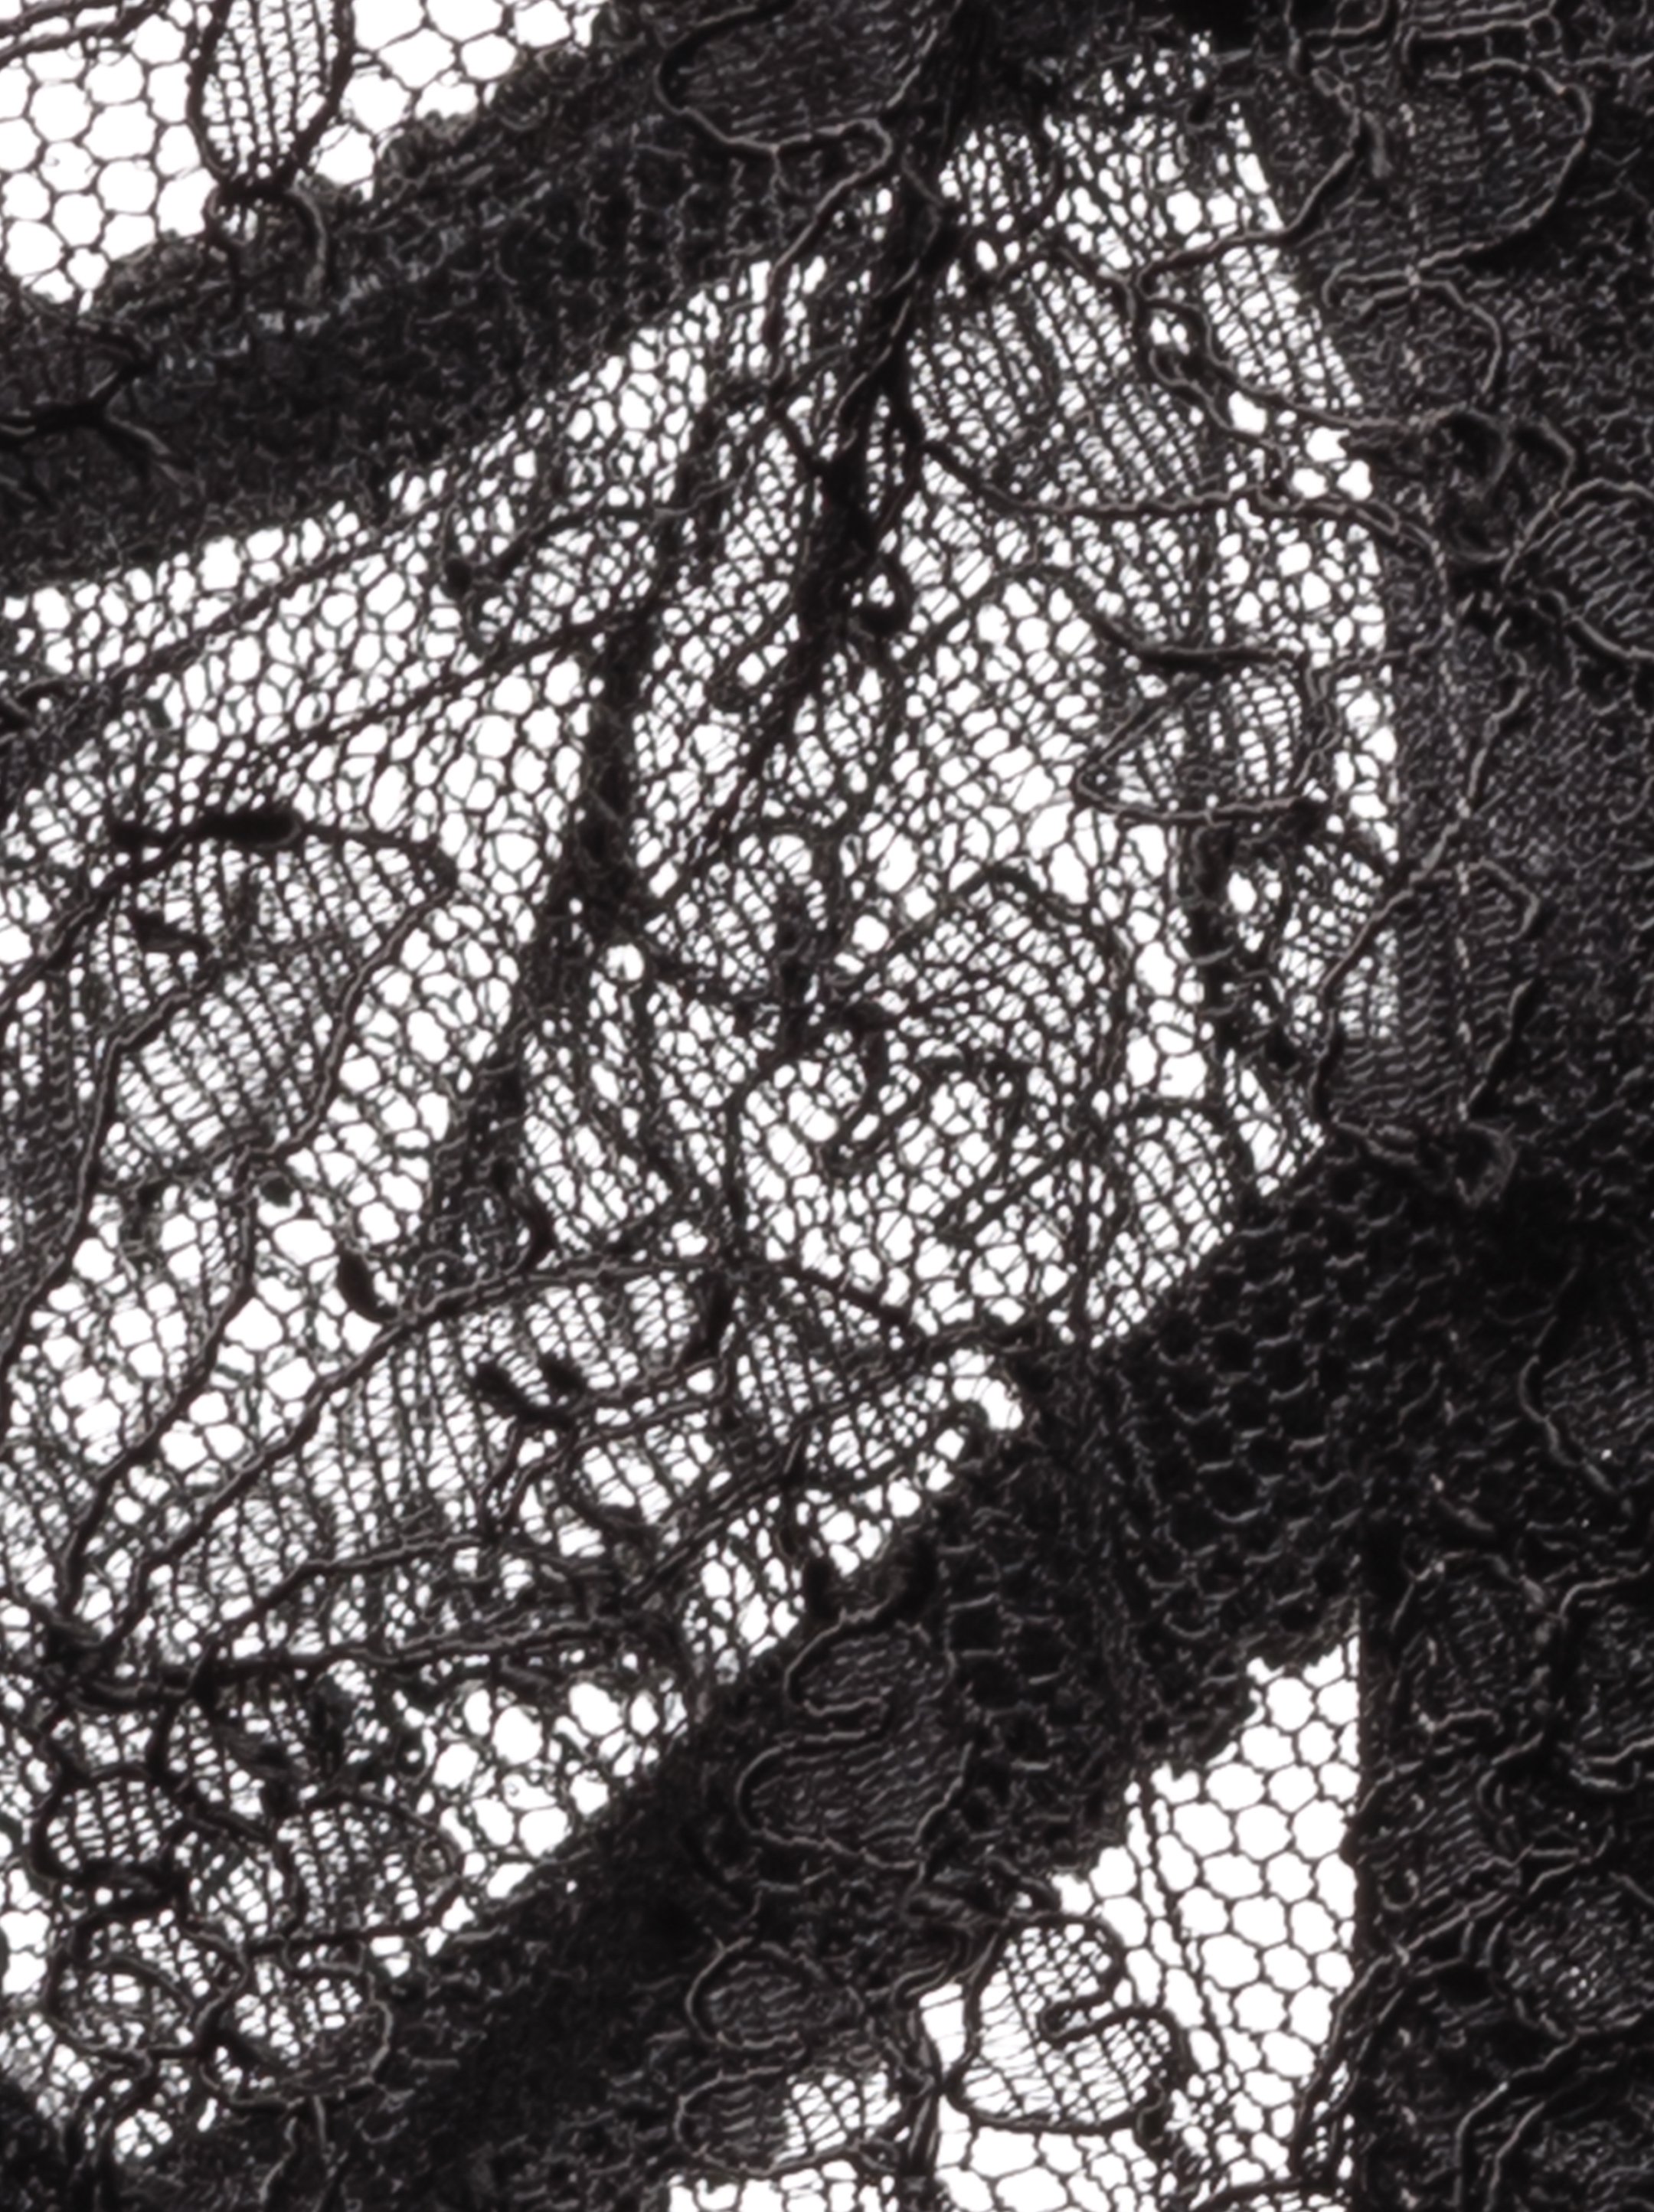 Dolce&Gabbana women's Logo lace bra - buy for 220000 KZT in the